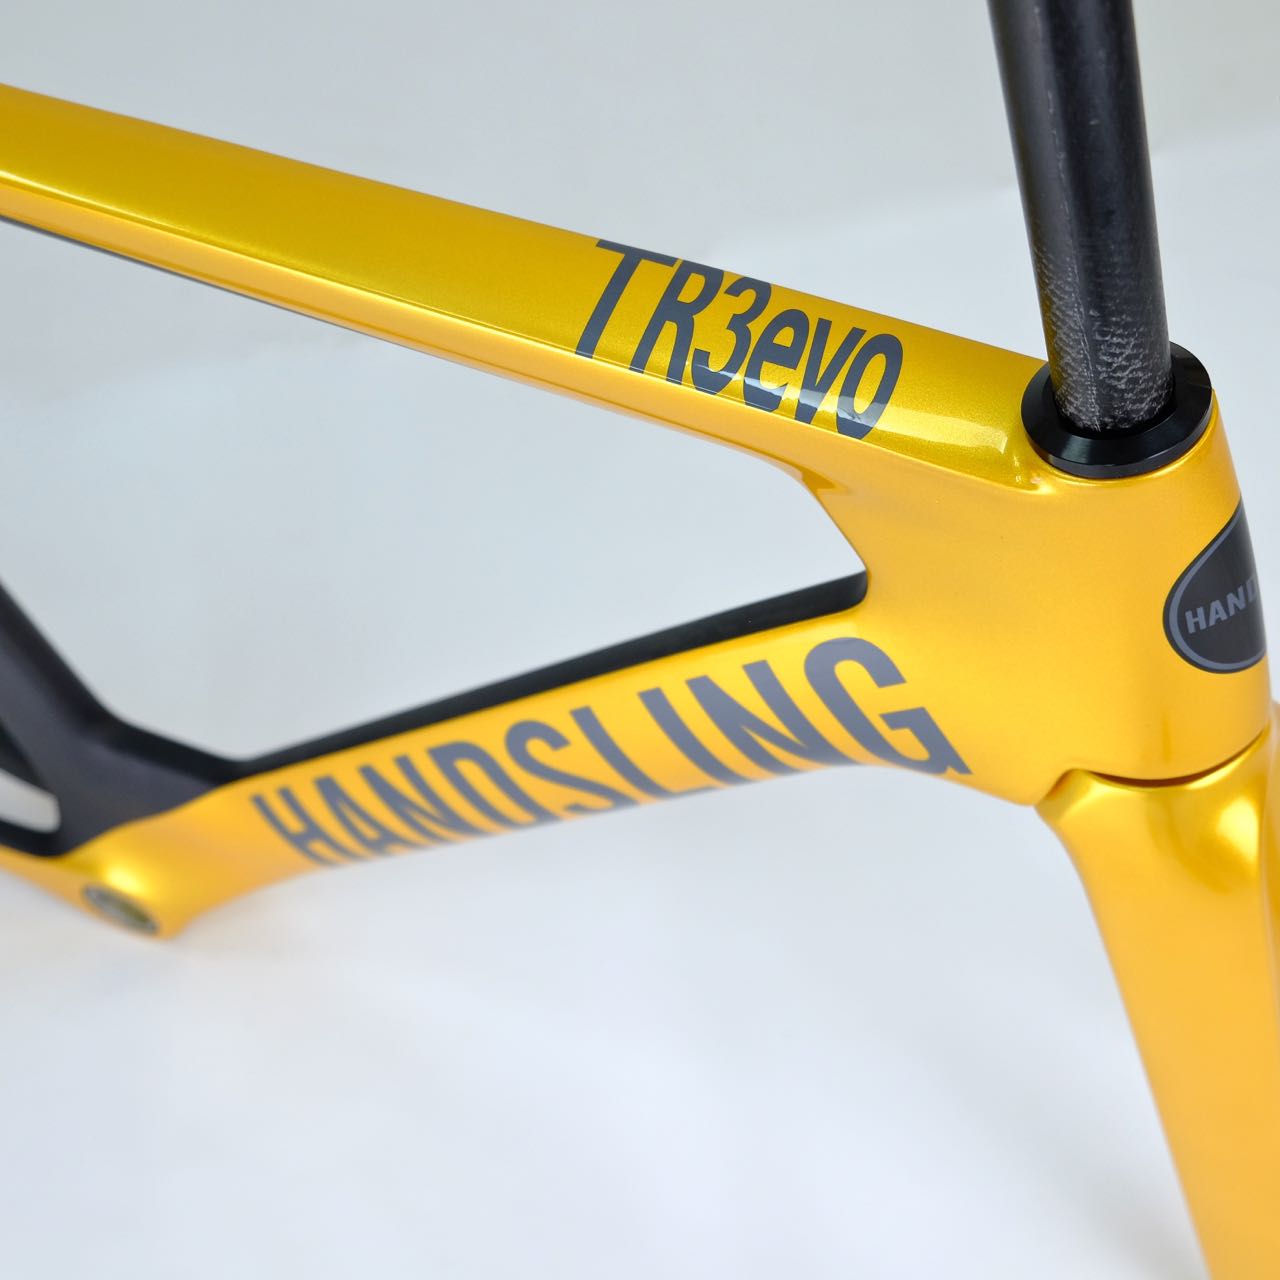 Handsling TR3evo Track Frame - Inca Yellow